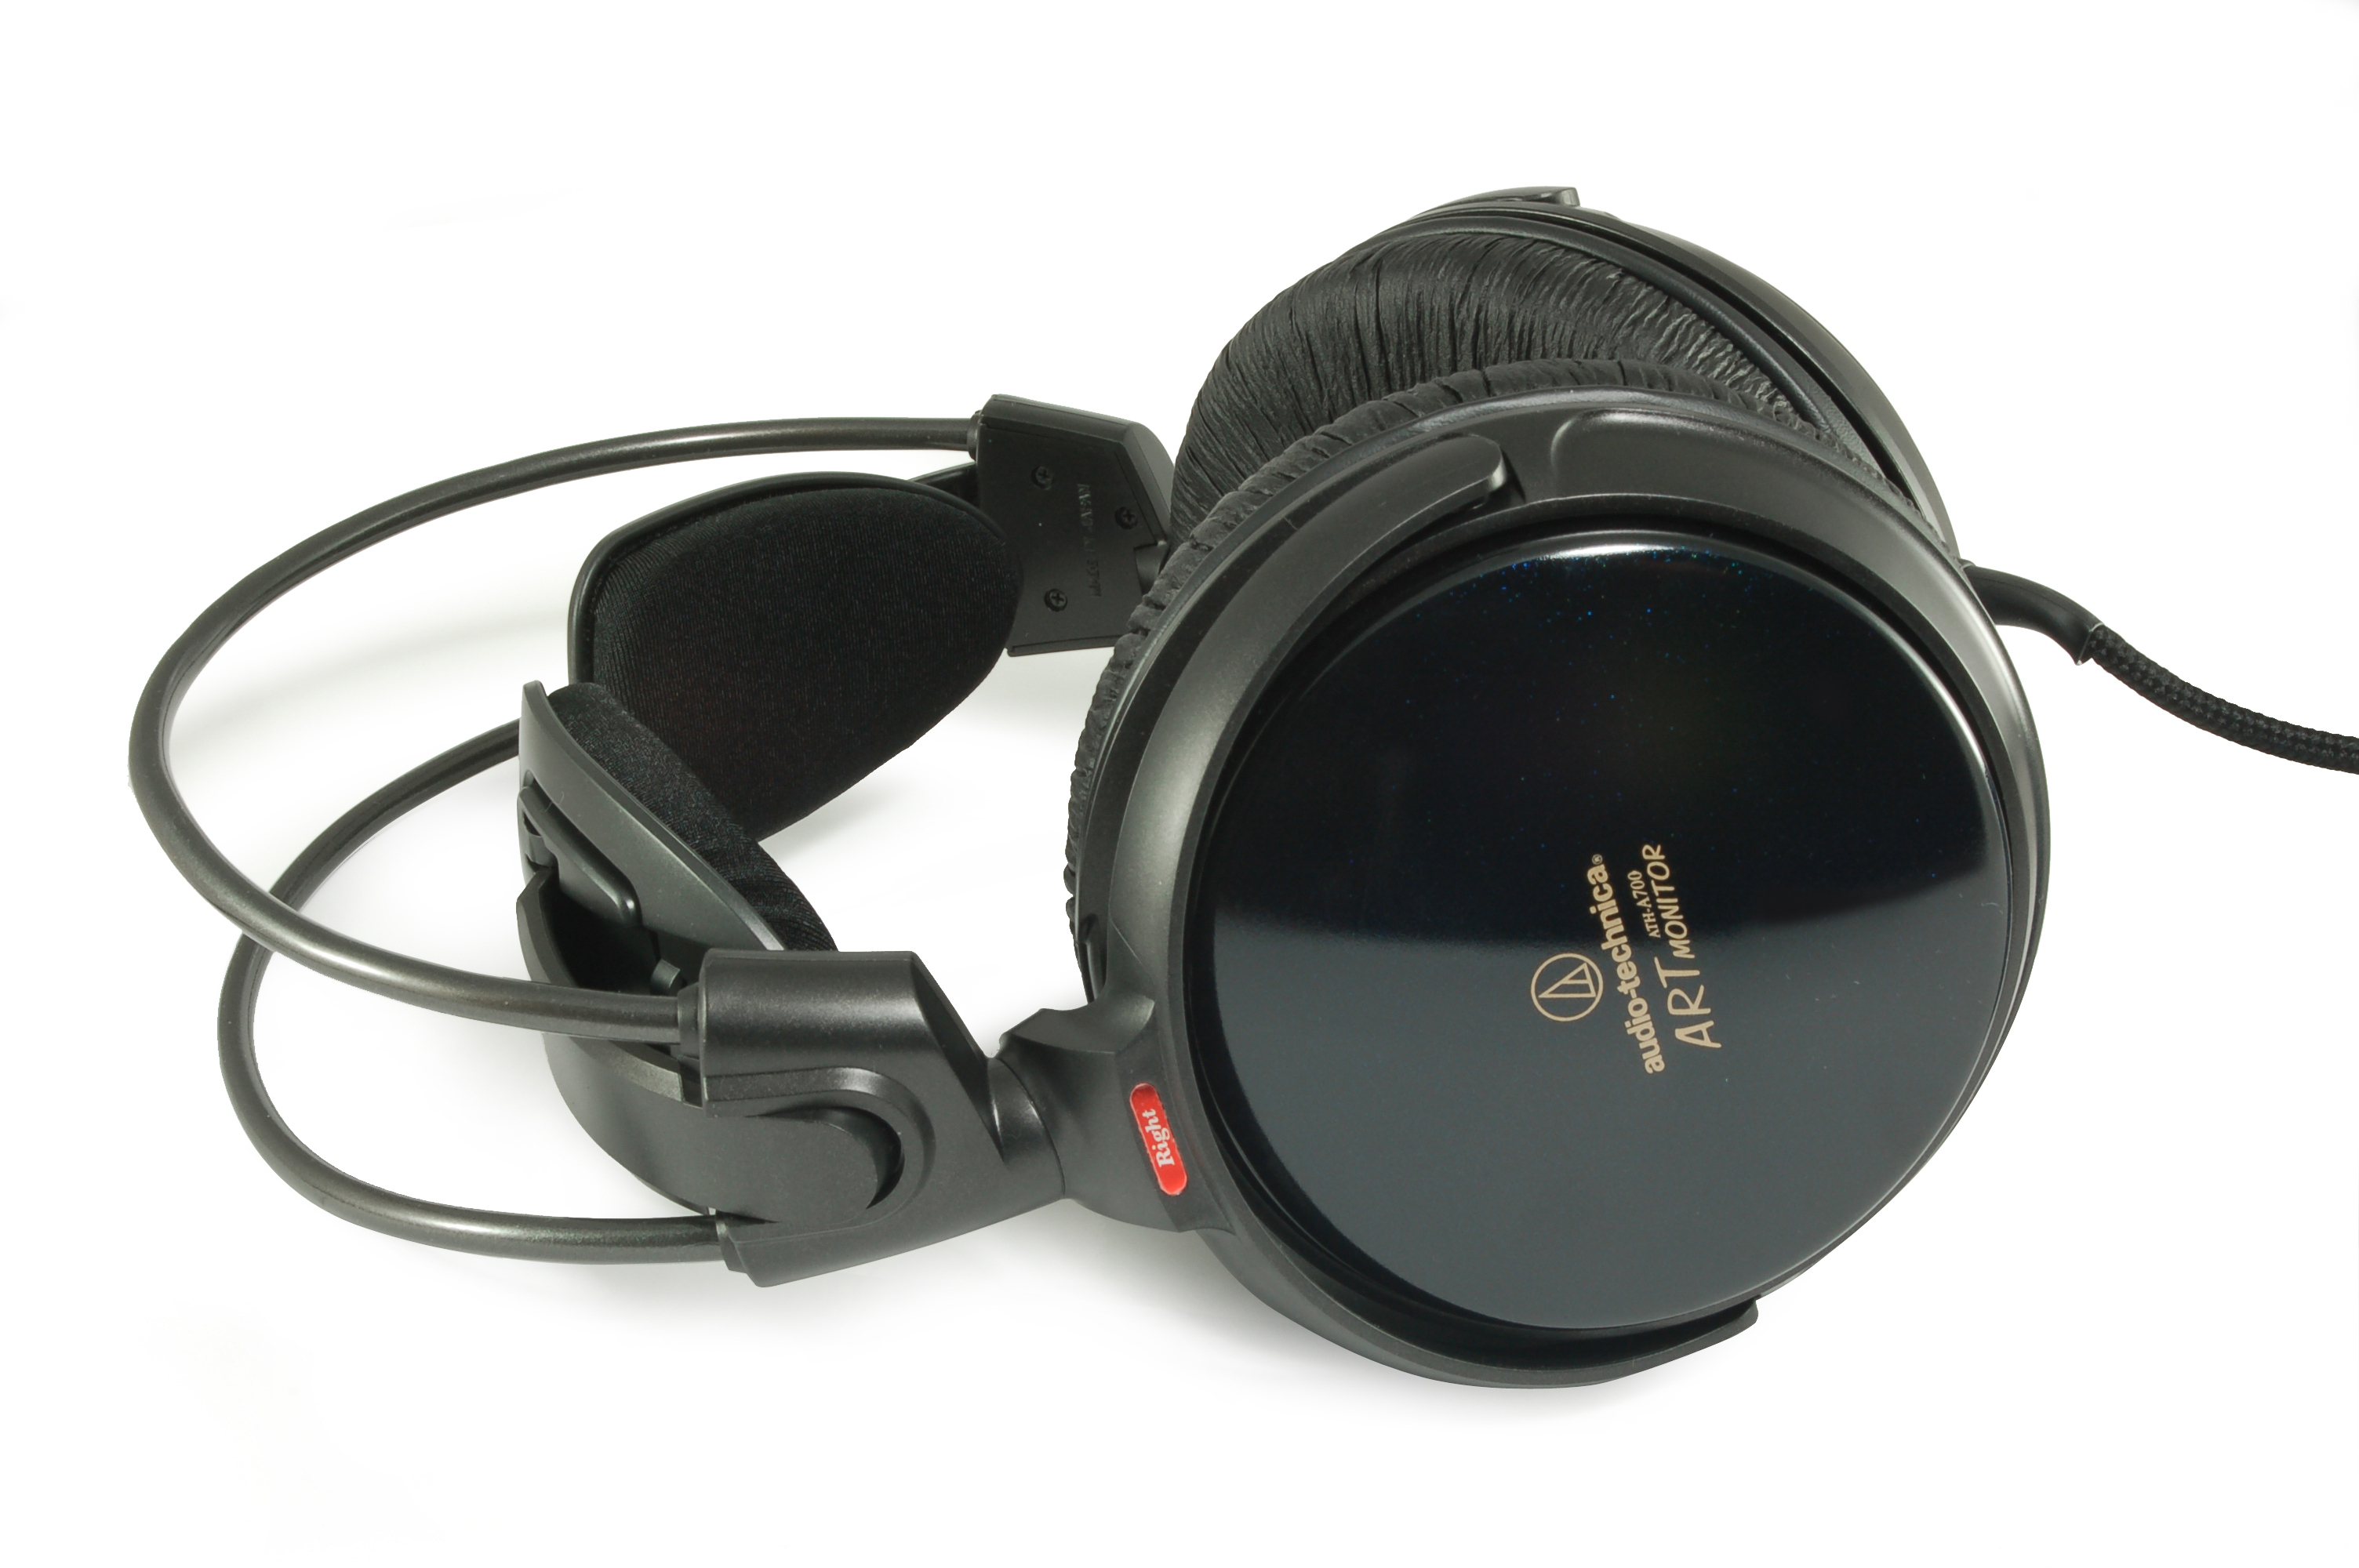 Audio-Technica Audio-Technica ATH-A700 Dynamic Headphones